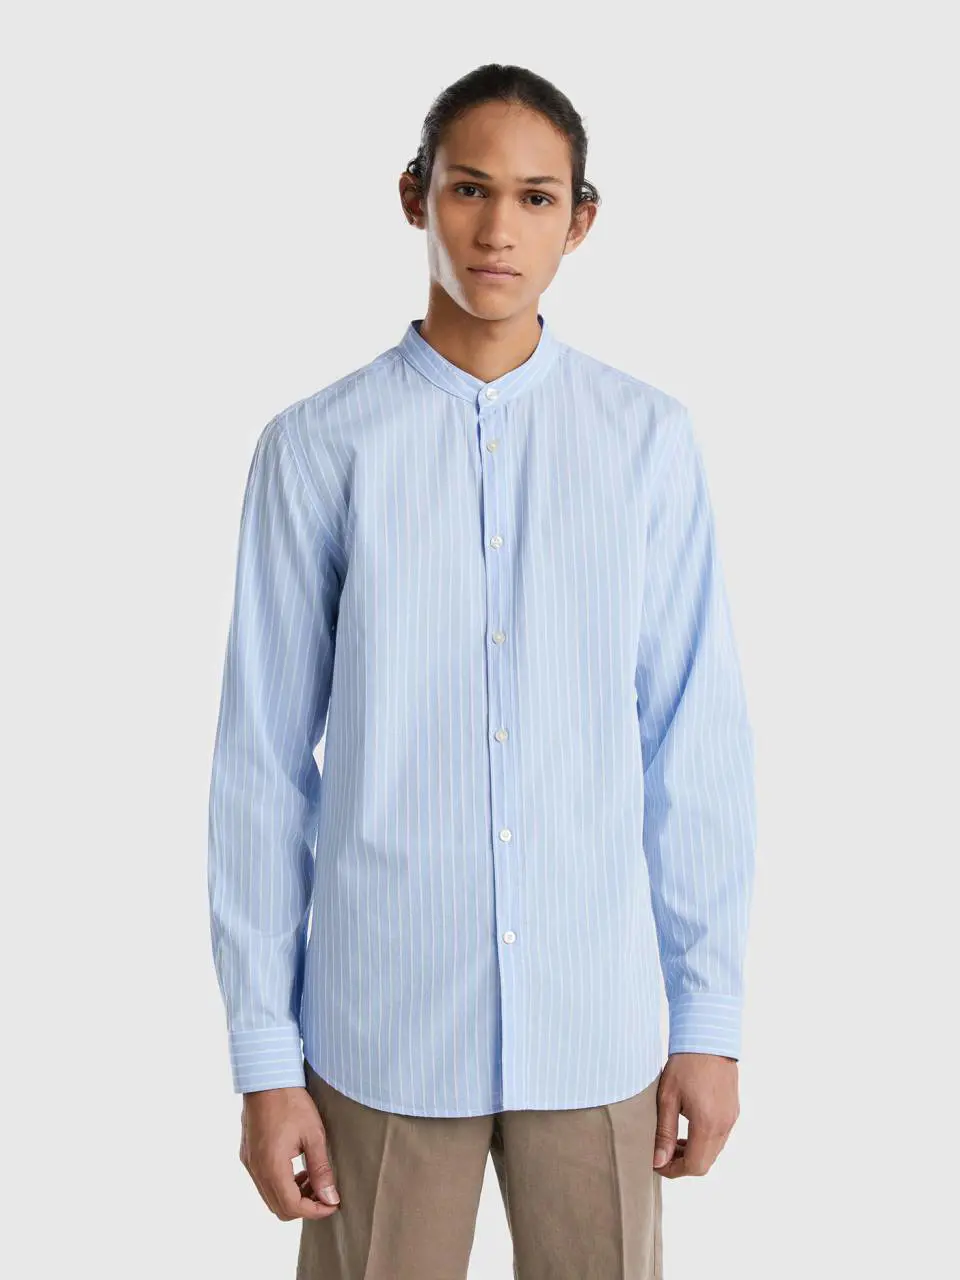 Benetton 100% cotton striped shirt. 1